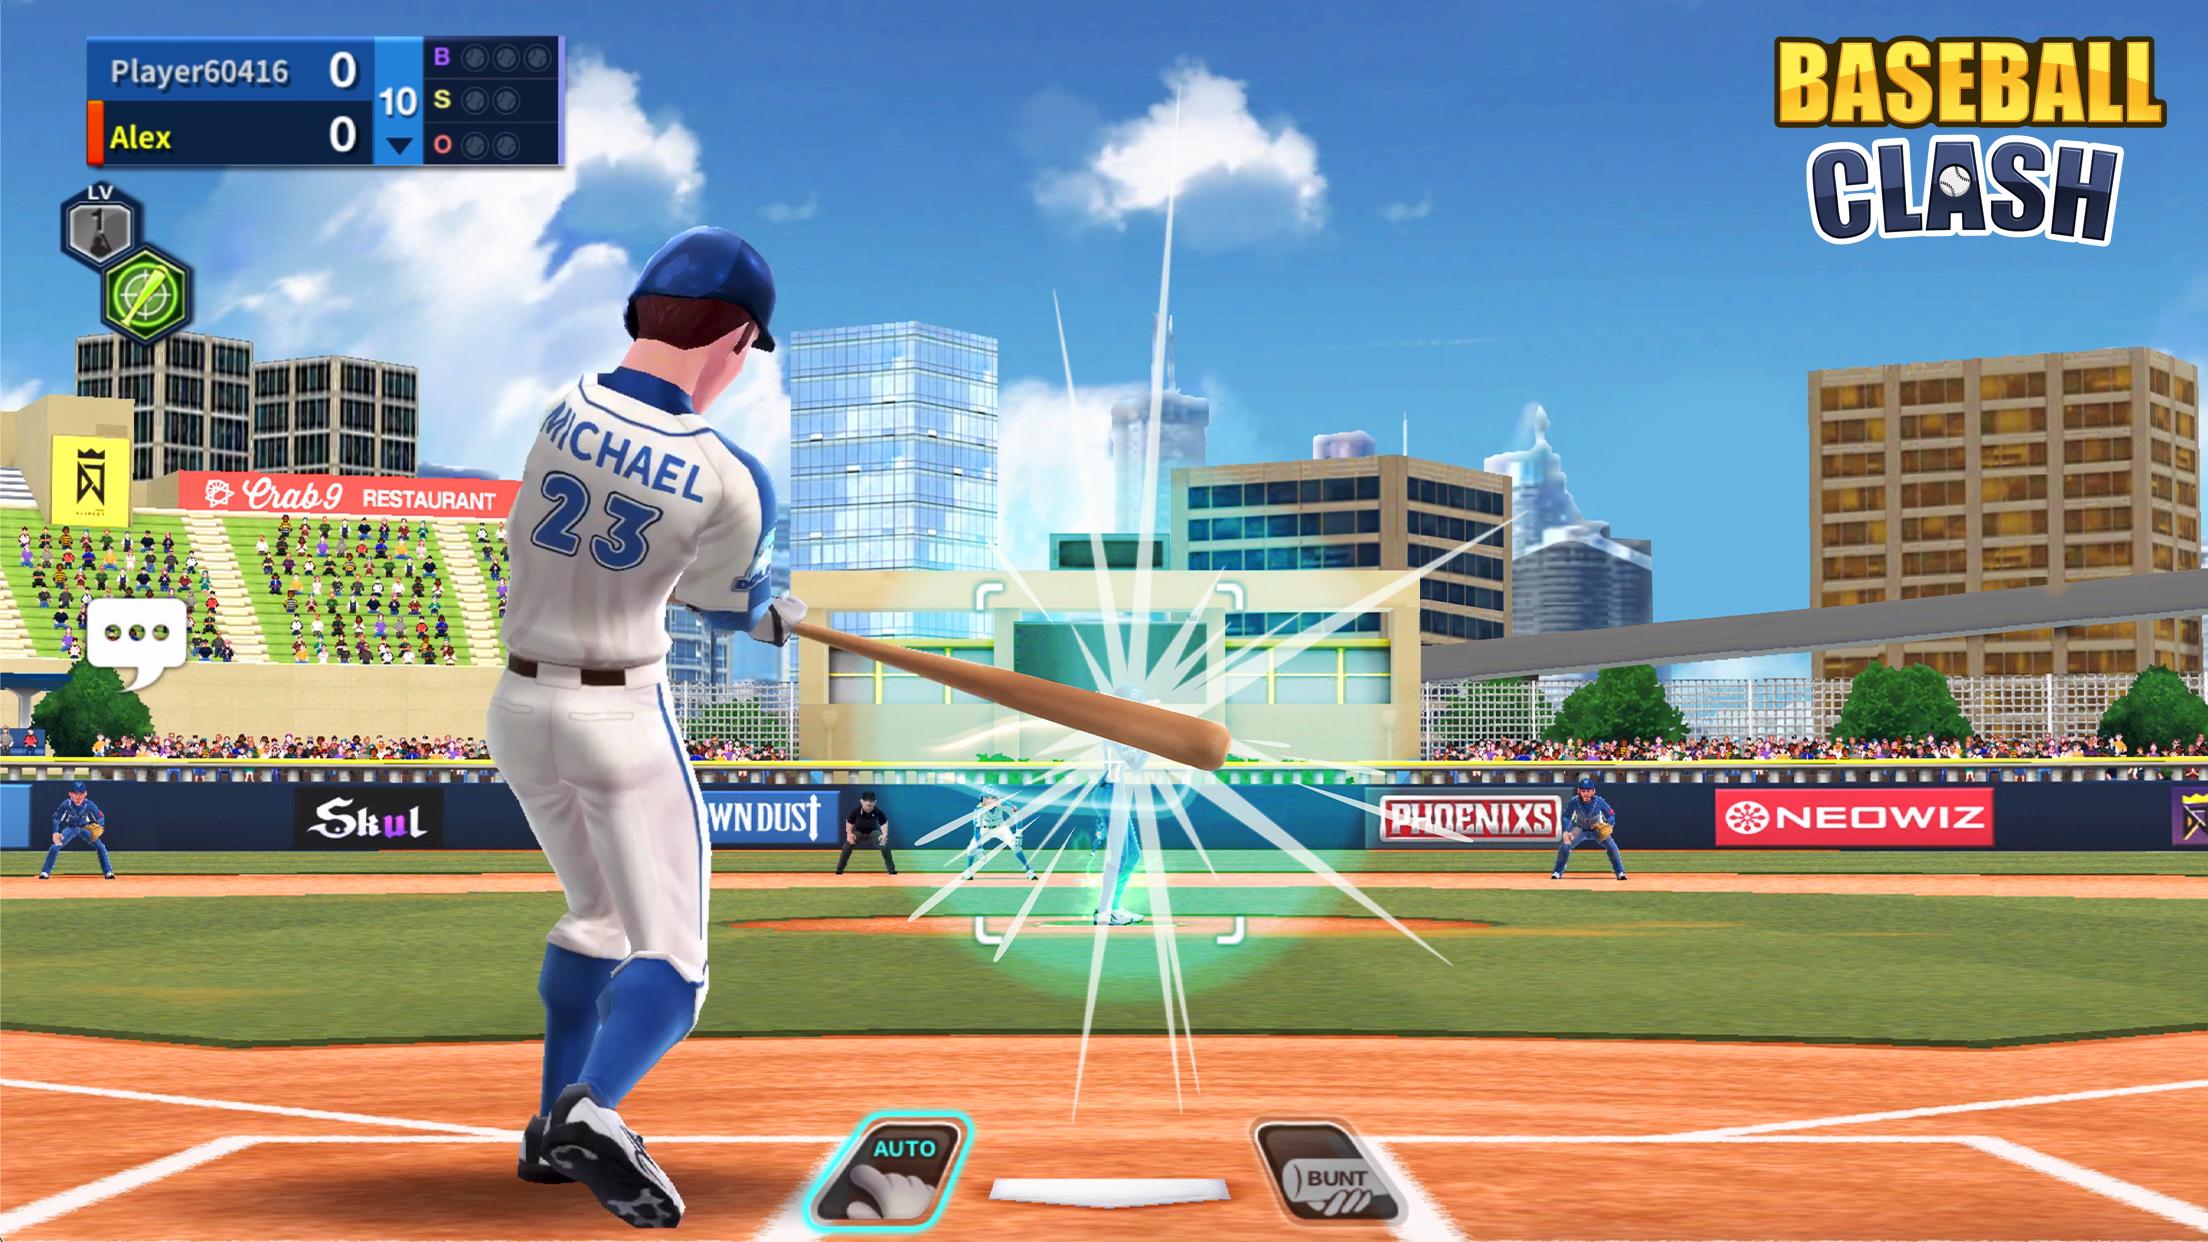 Бейсбол время. Quick игра. Real game time. Game time 32 игры. Baseball Clash character.